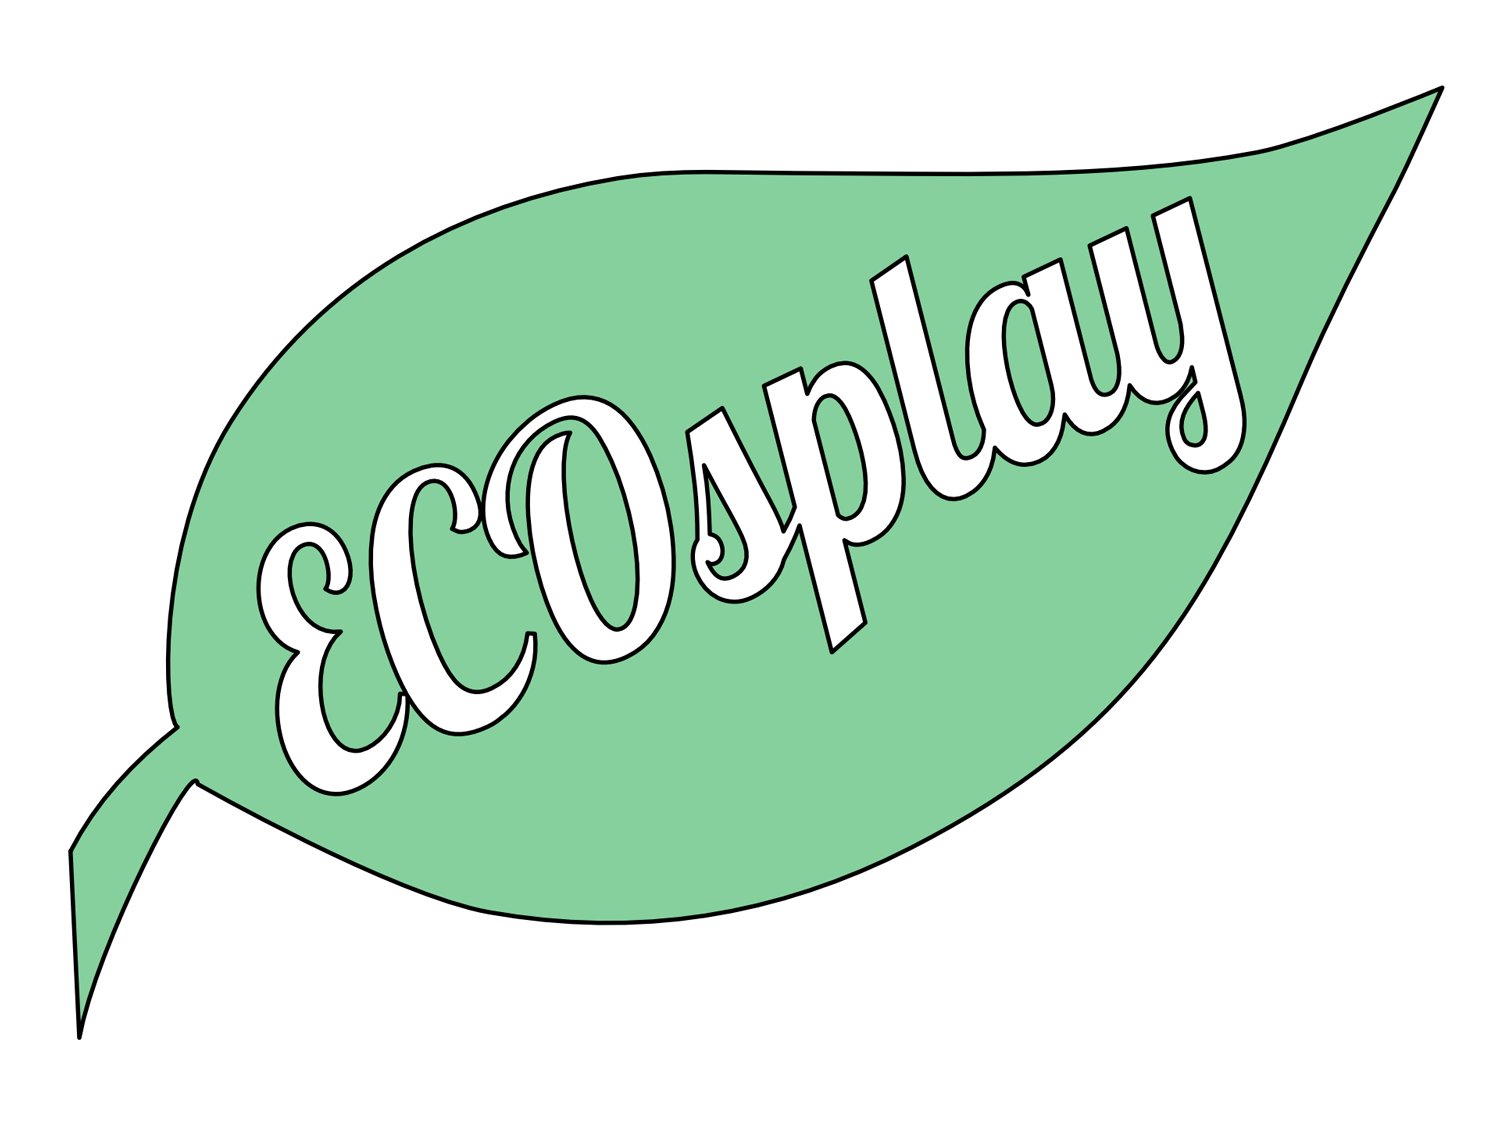 grünes Blatt mit Schriftzug "ECOsplay"